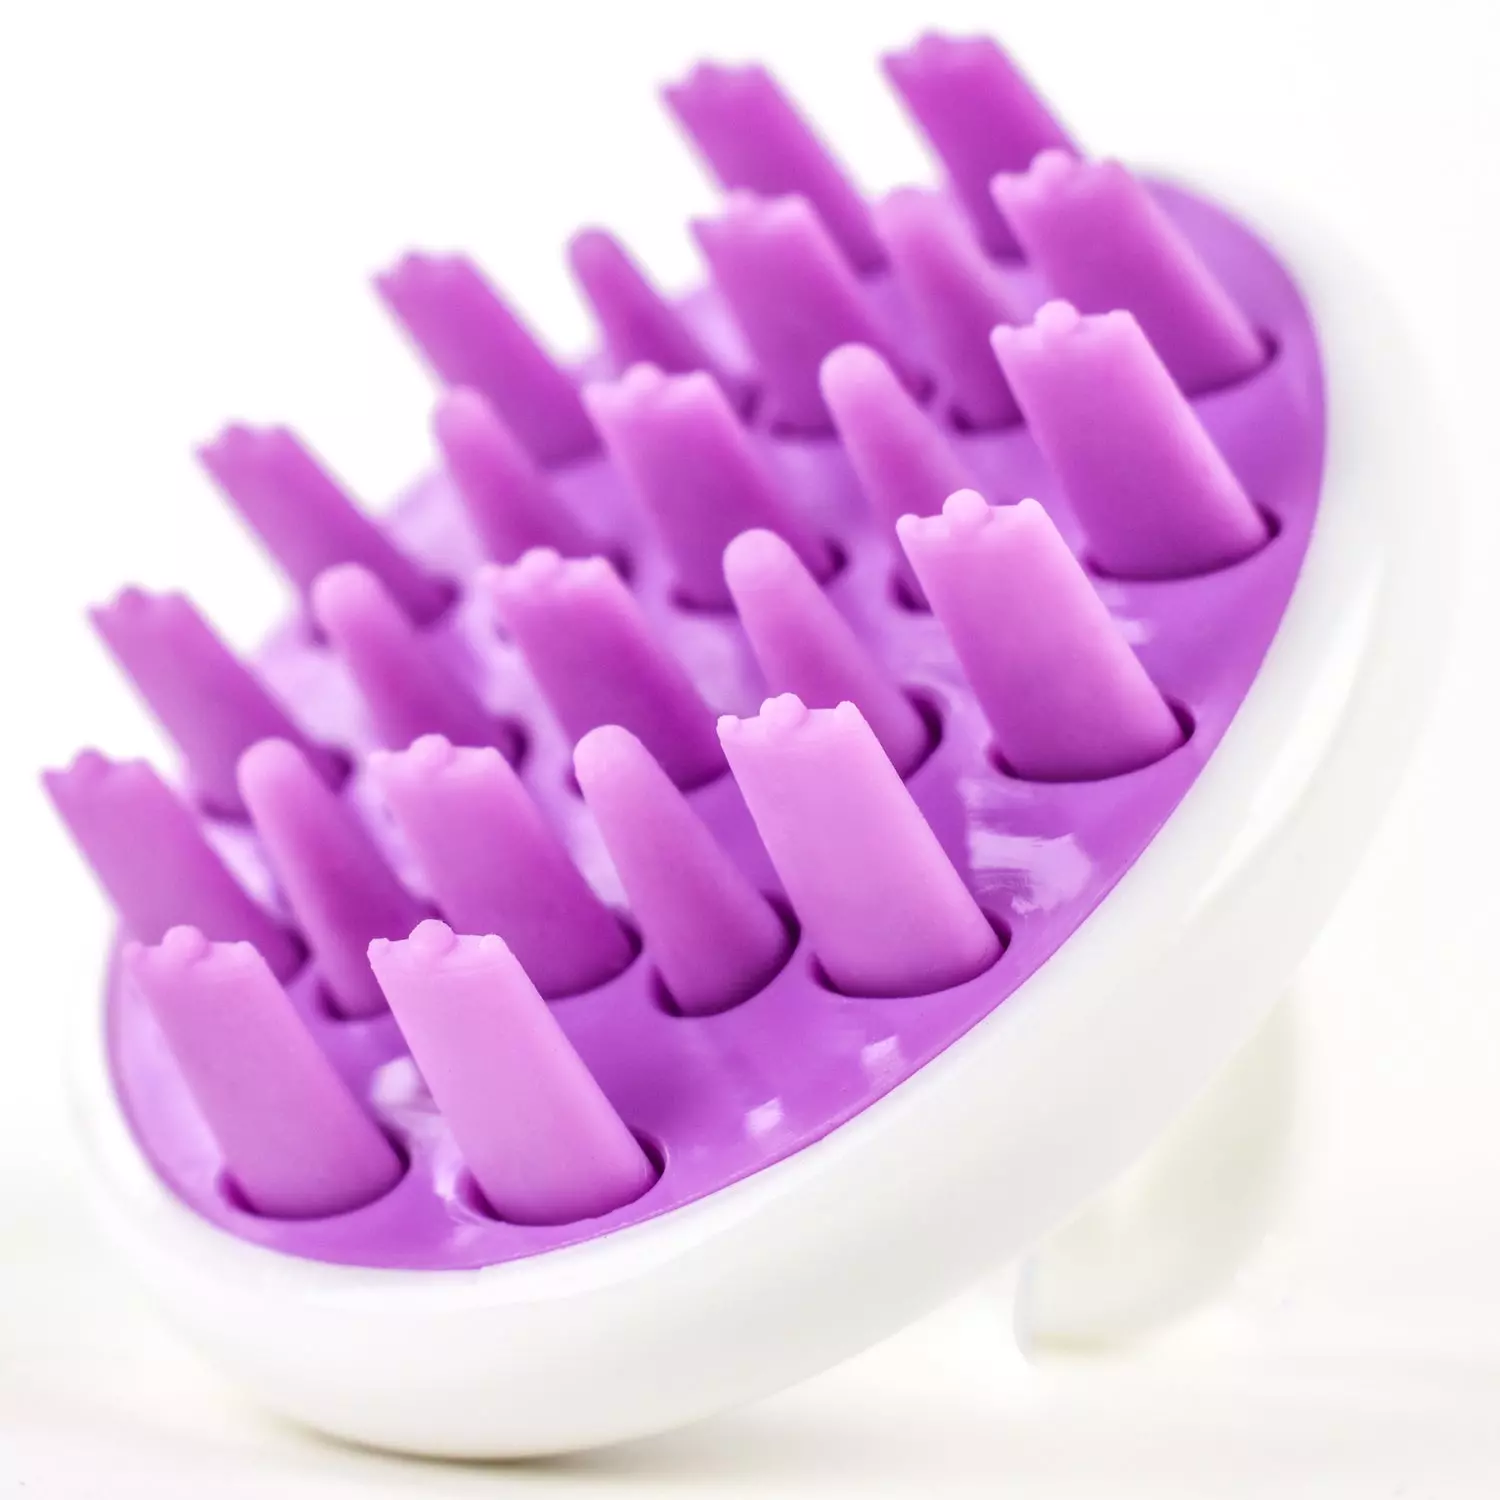 Zyllion Scalp Massager Dandruff Brush - For Exfoliating Treatment, Shampoo Scrubbing, and Hair Growth (Purple)